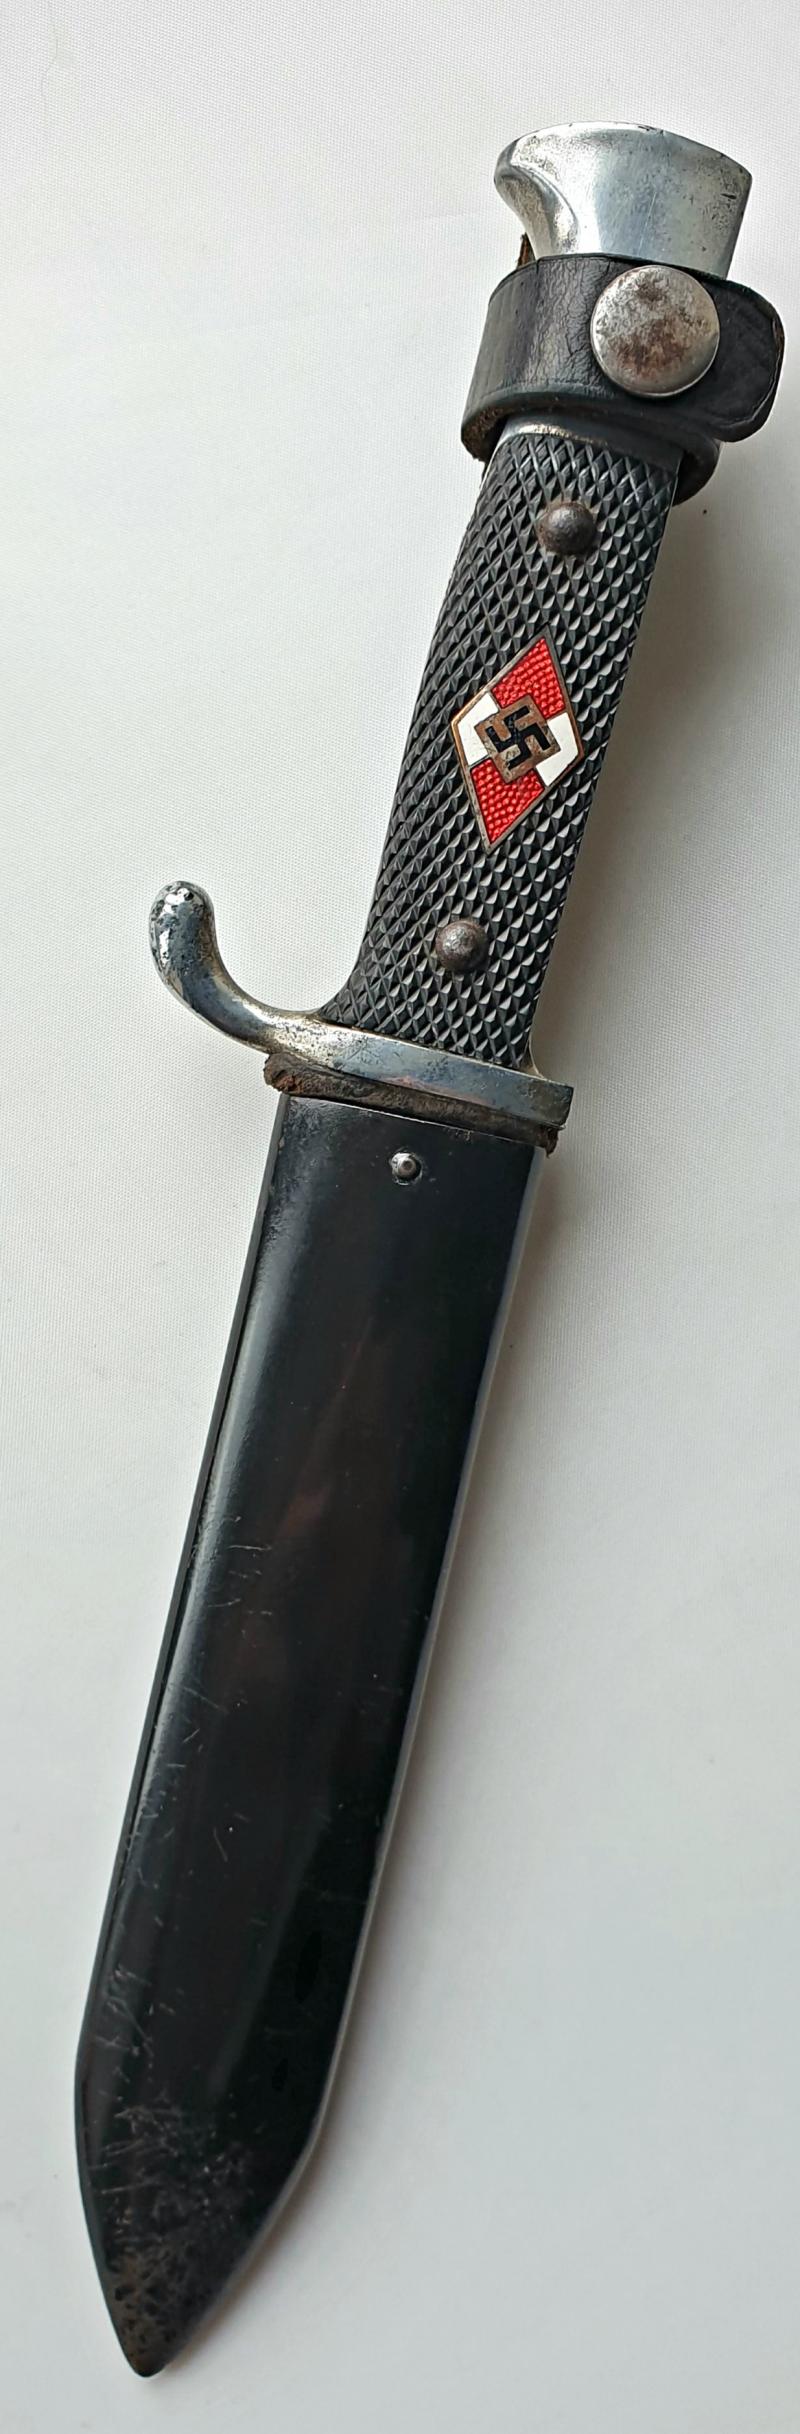 Hitler Youth Knife.